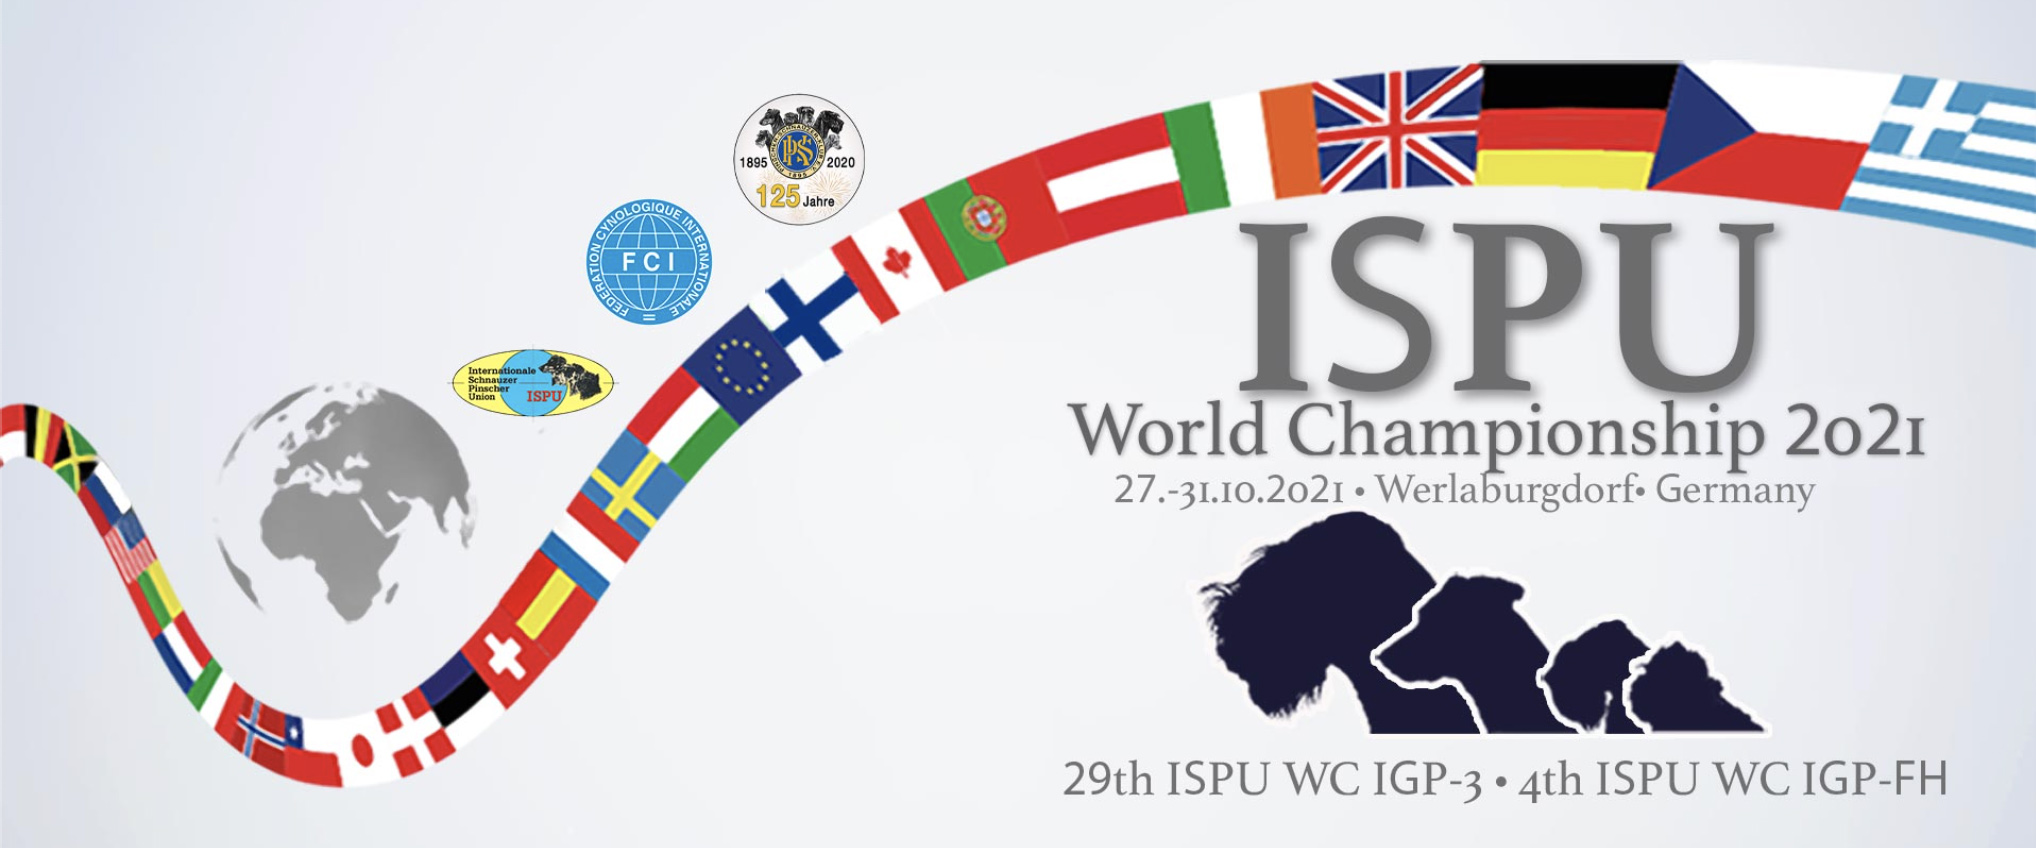 ISPU VM 2021 banner